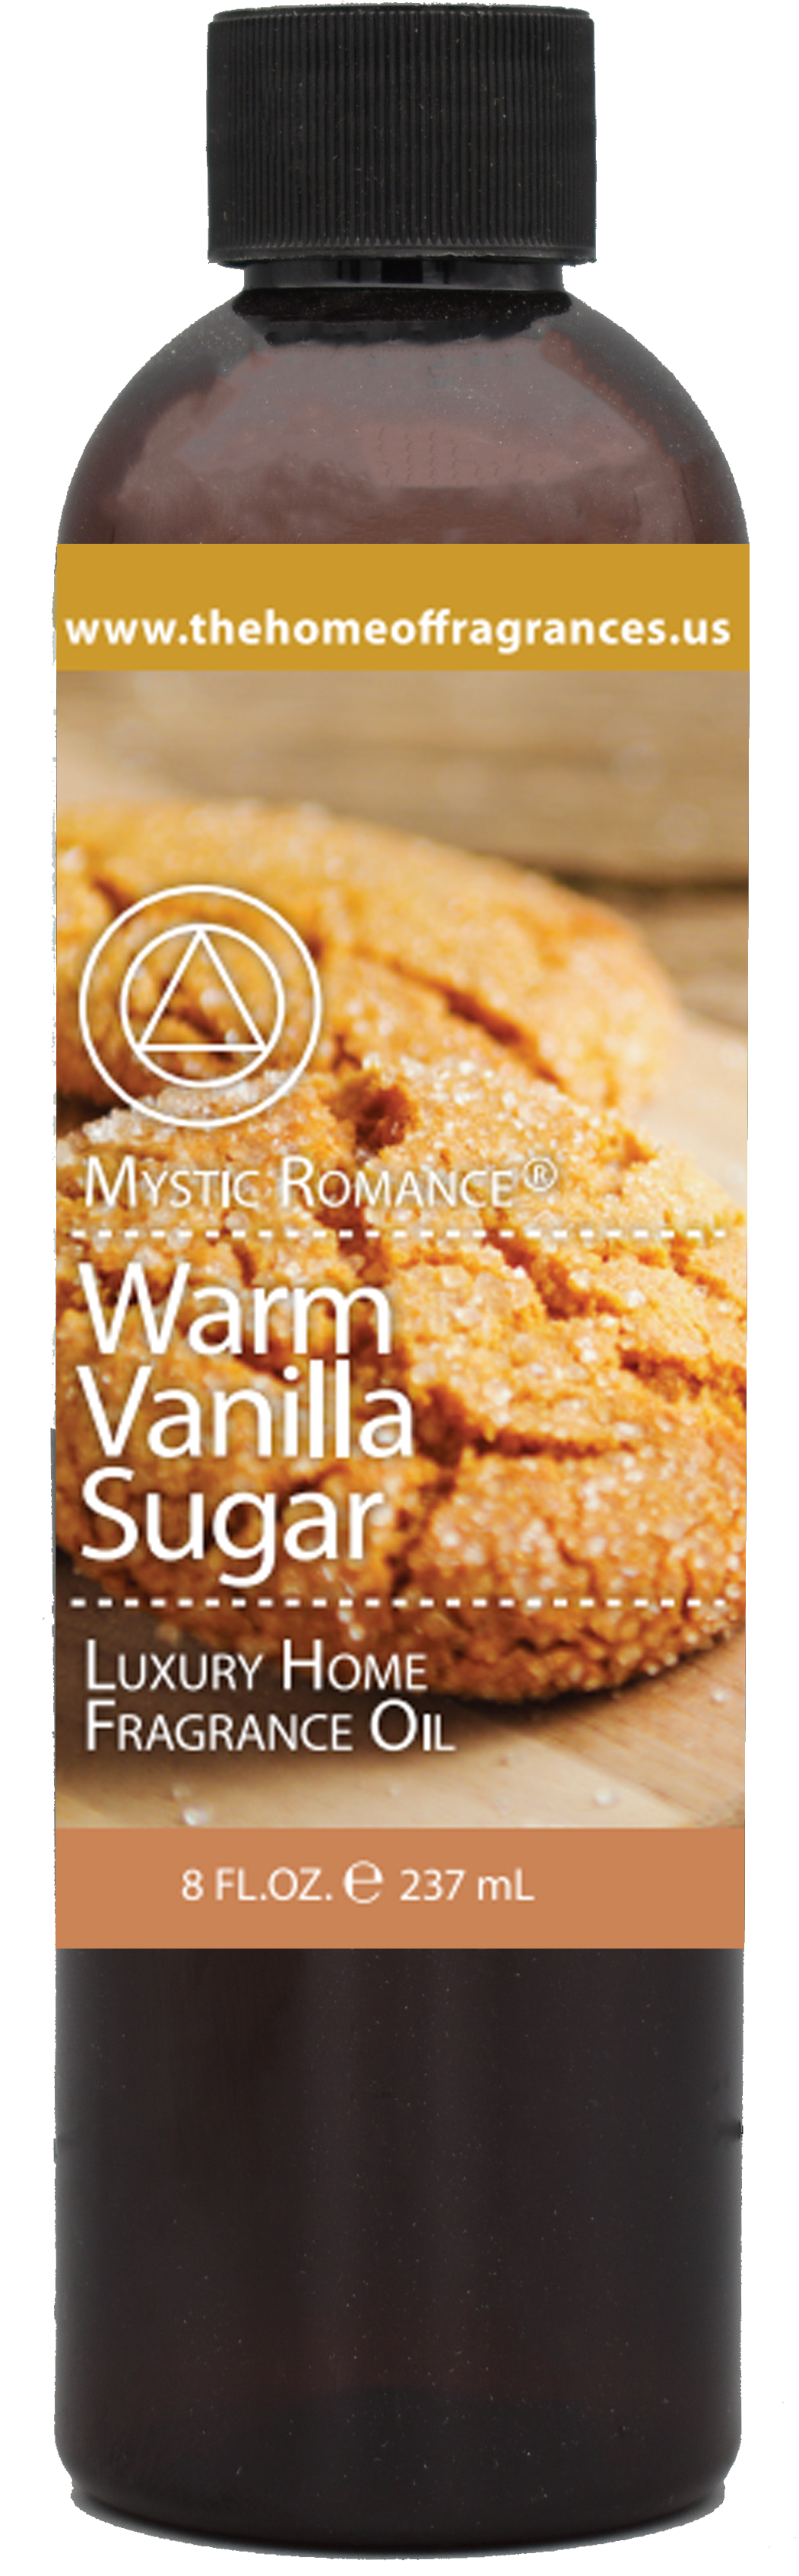 Warm Vanilla Sugar Premium Fragrance Oil